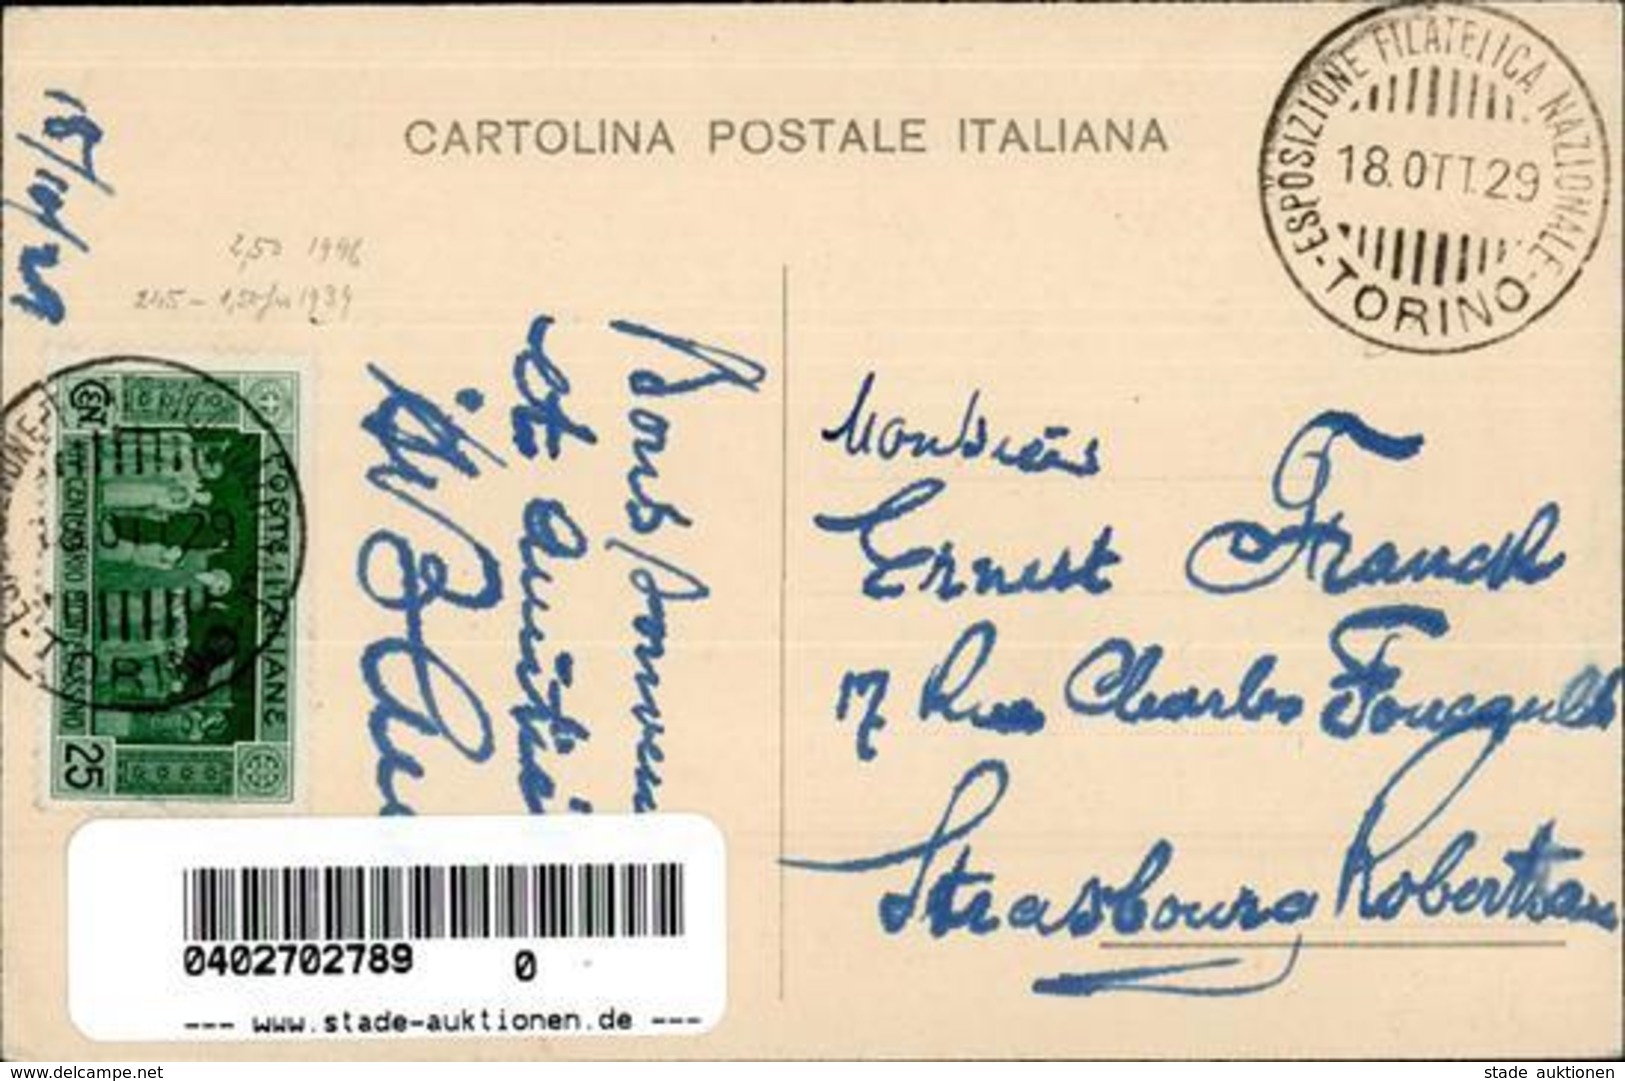 Philatelistentag Torino (10100) Italien XVI. Congresso Filatelico Italiano I-II - Correos & Carteros